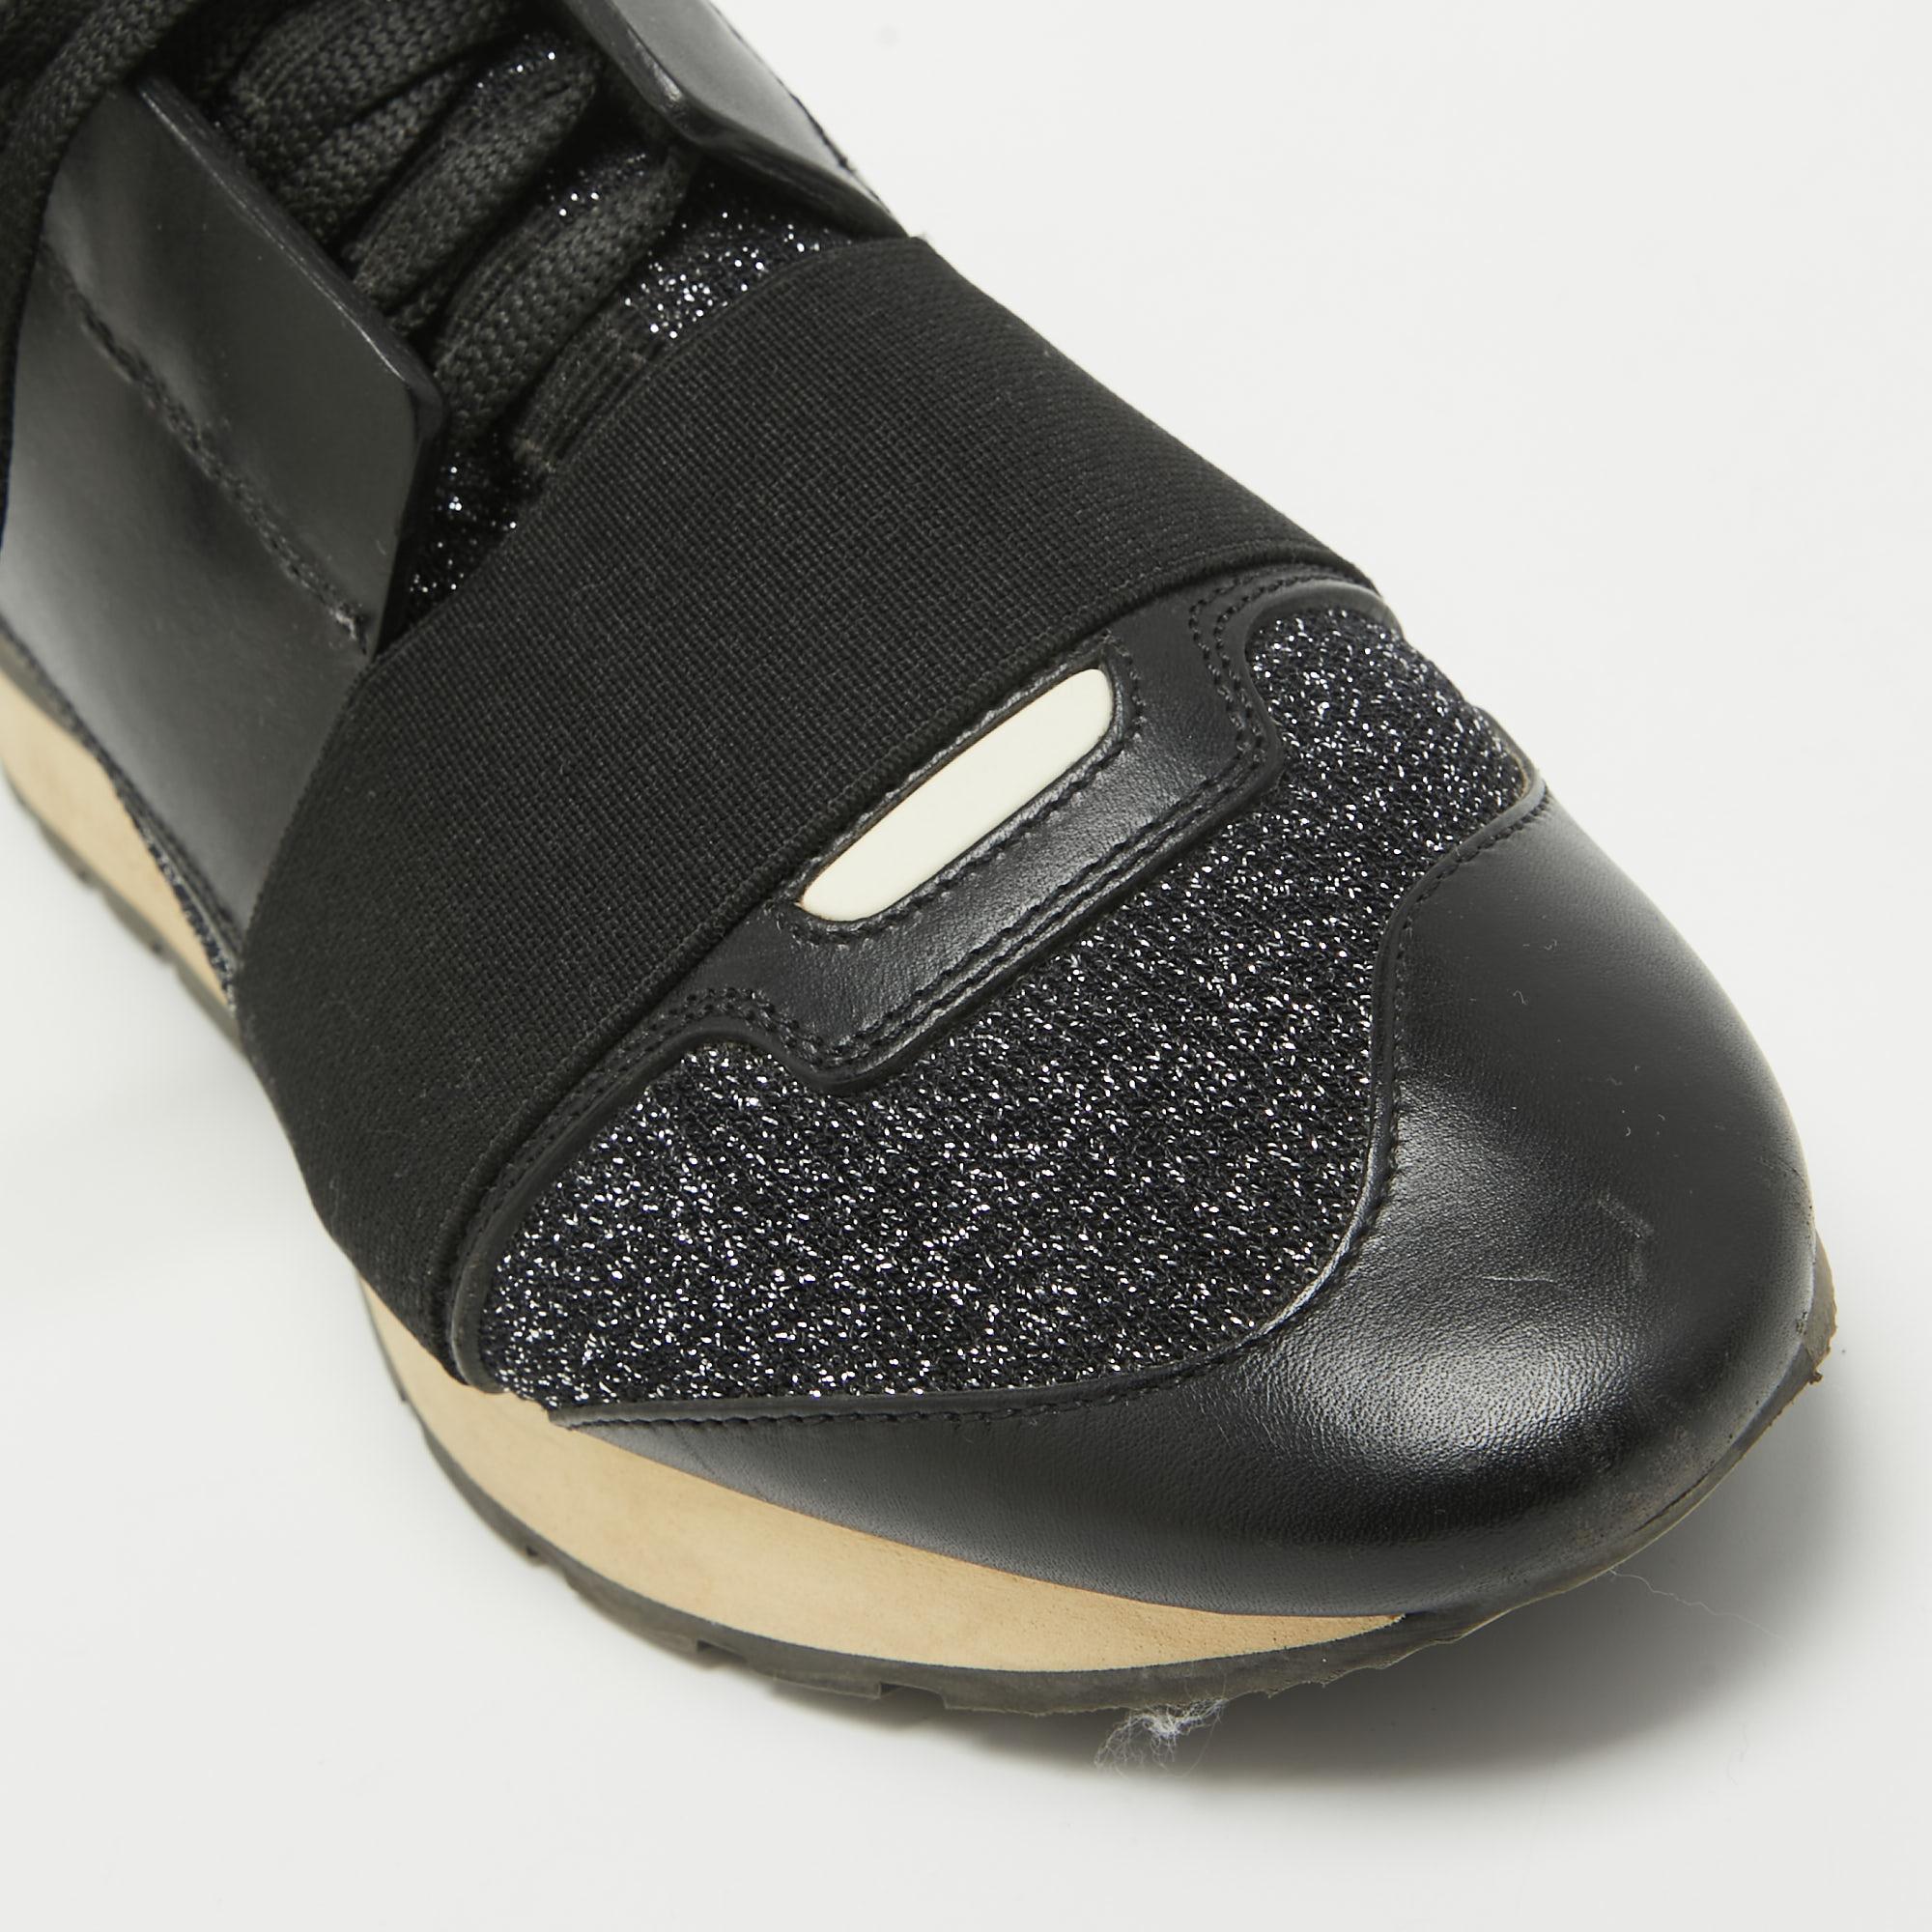 Balenciaga Black Leather and Glitter Knit Fabric Race Runner Sneakers Size 37 In Good Condition For Sale In Dubai, Al Qouz 2